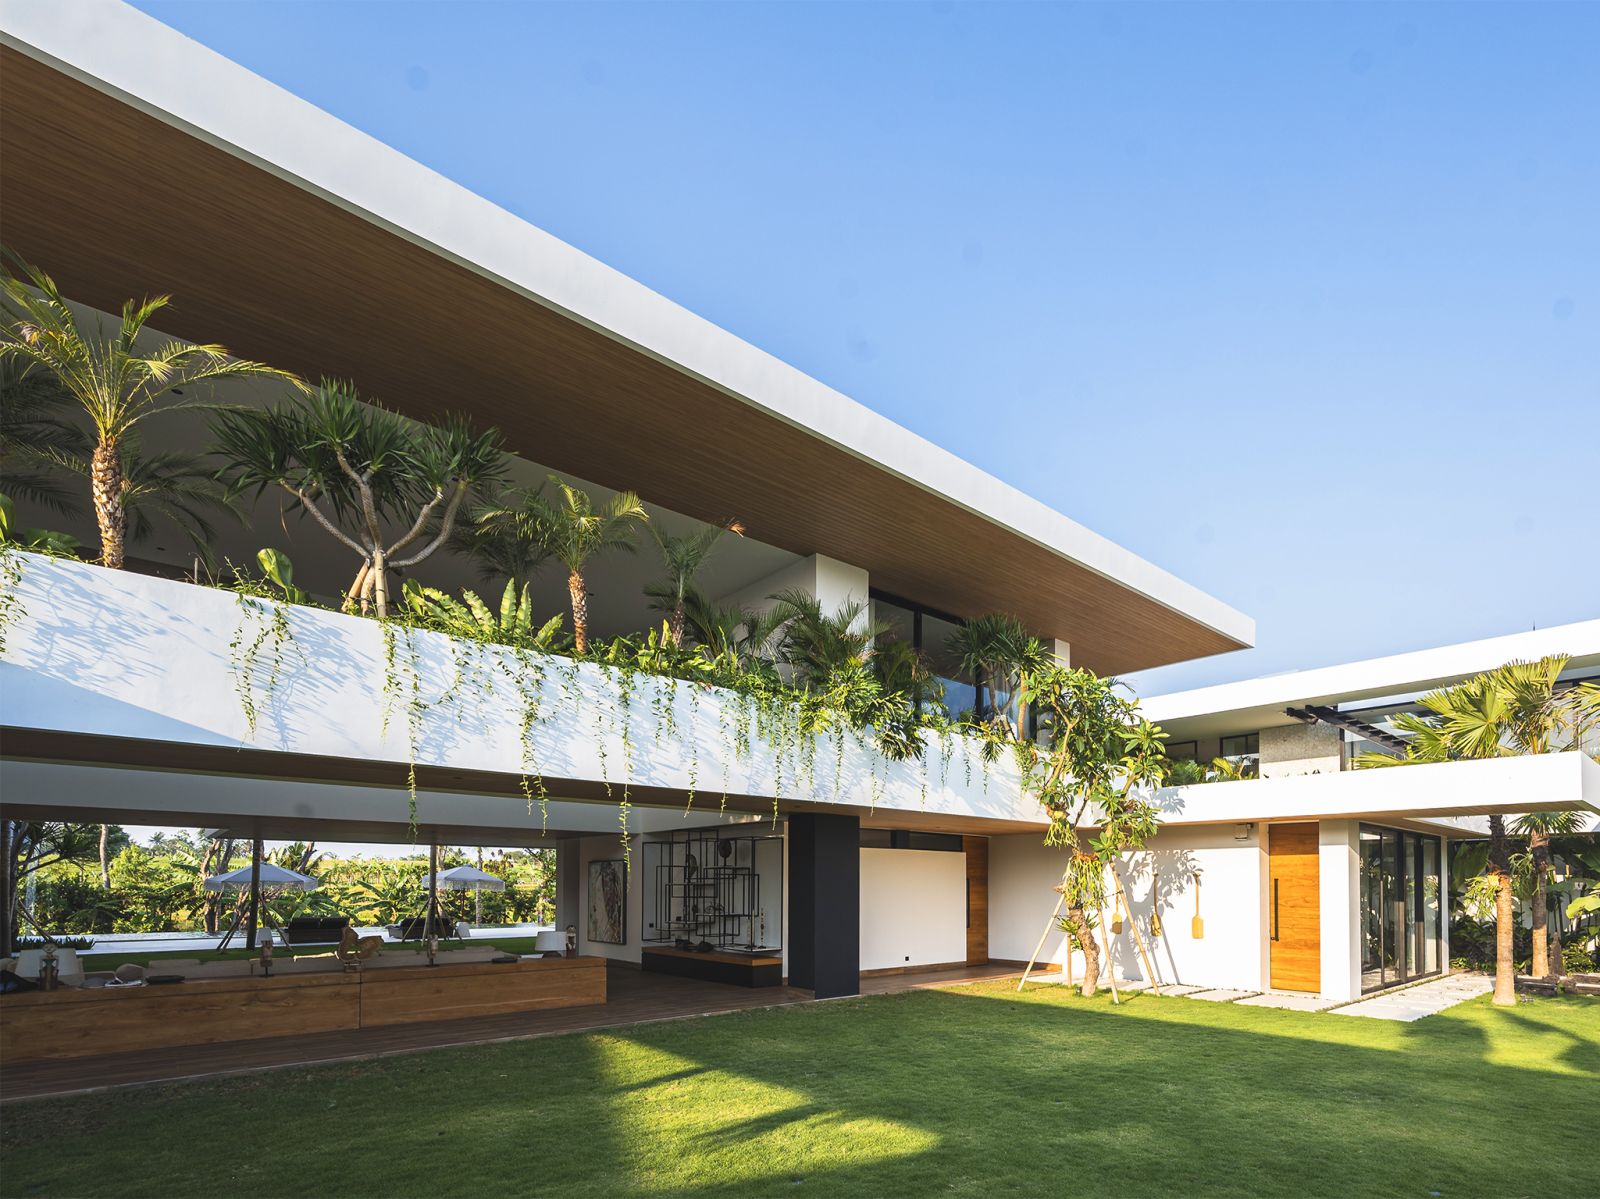 02 villa nica modern architecture for open living